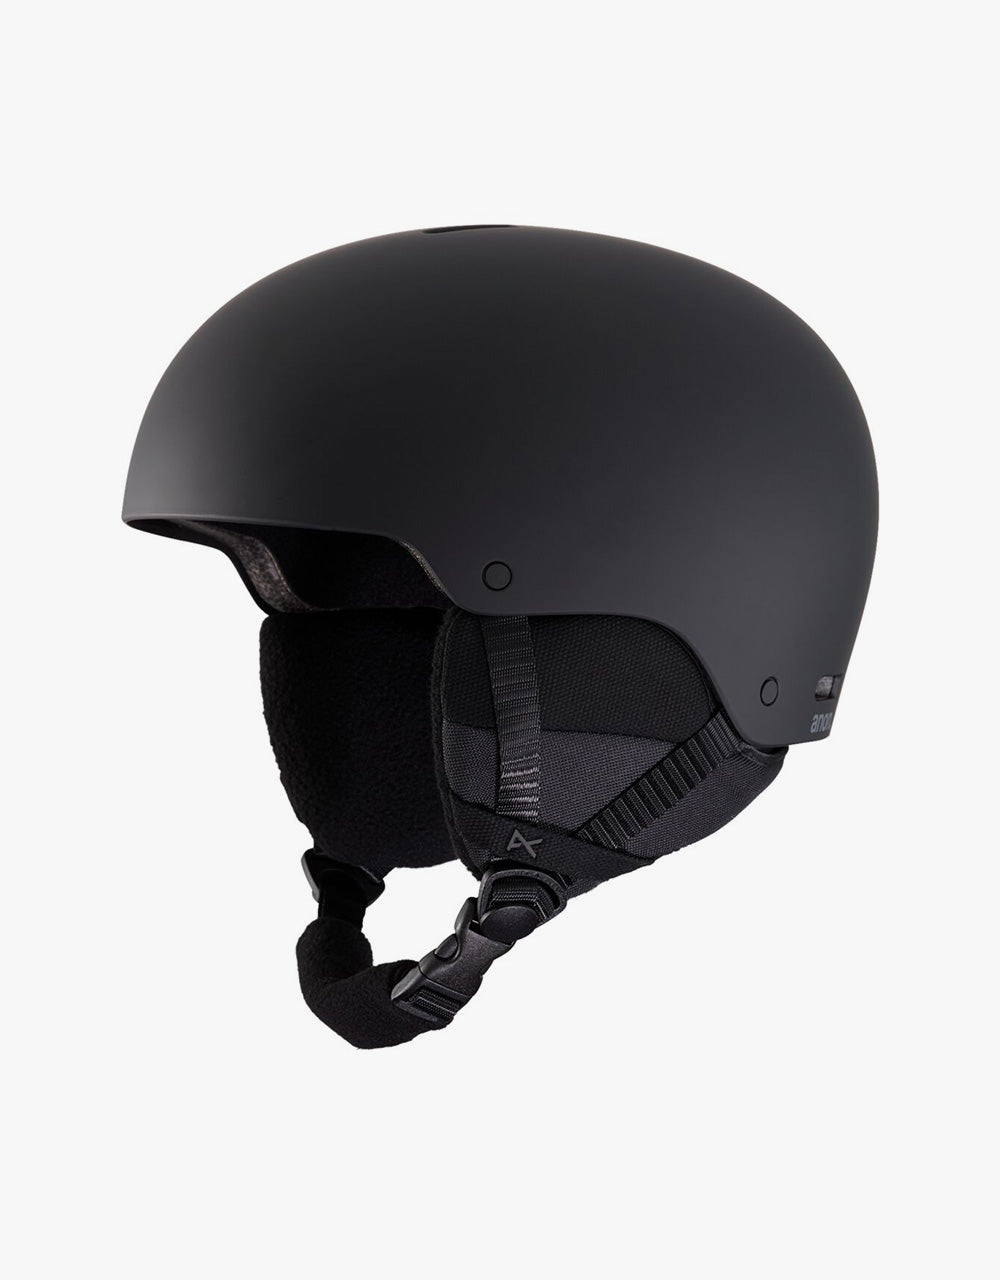 Anon Raider 3 MIPS Snowboard Helmet - Black